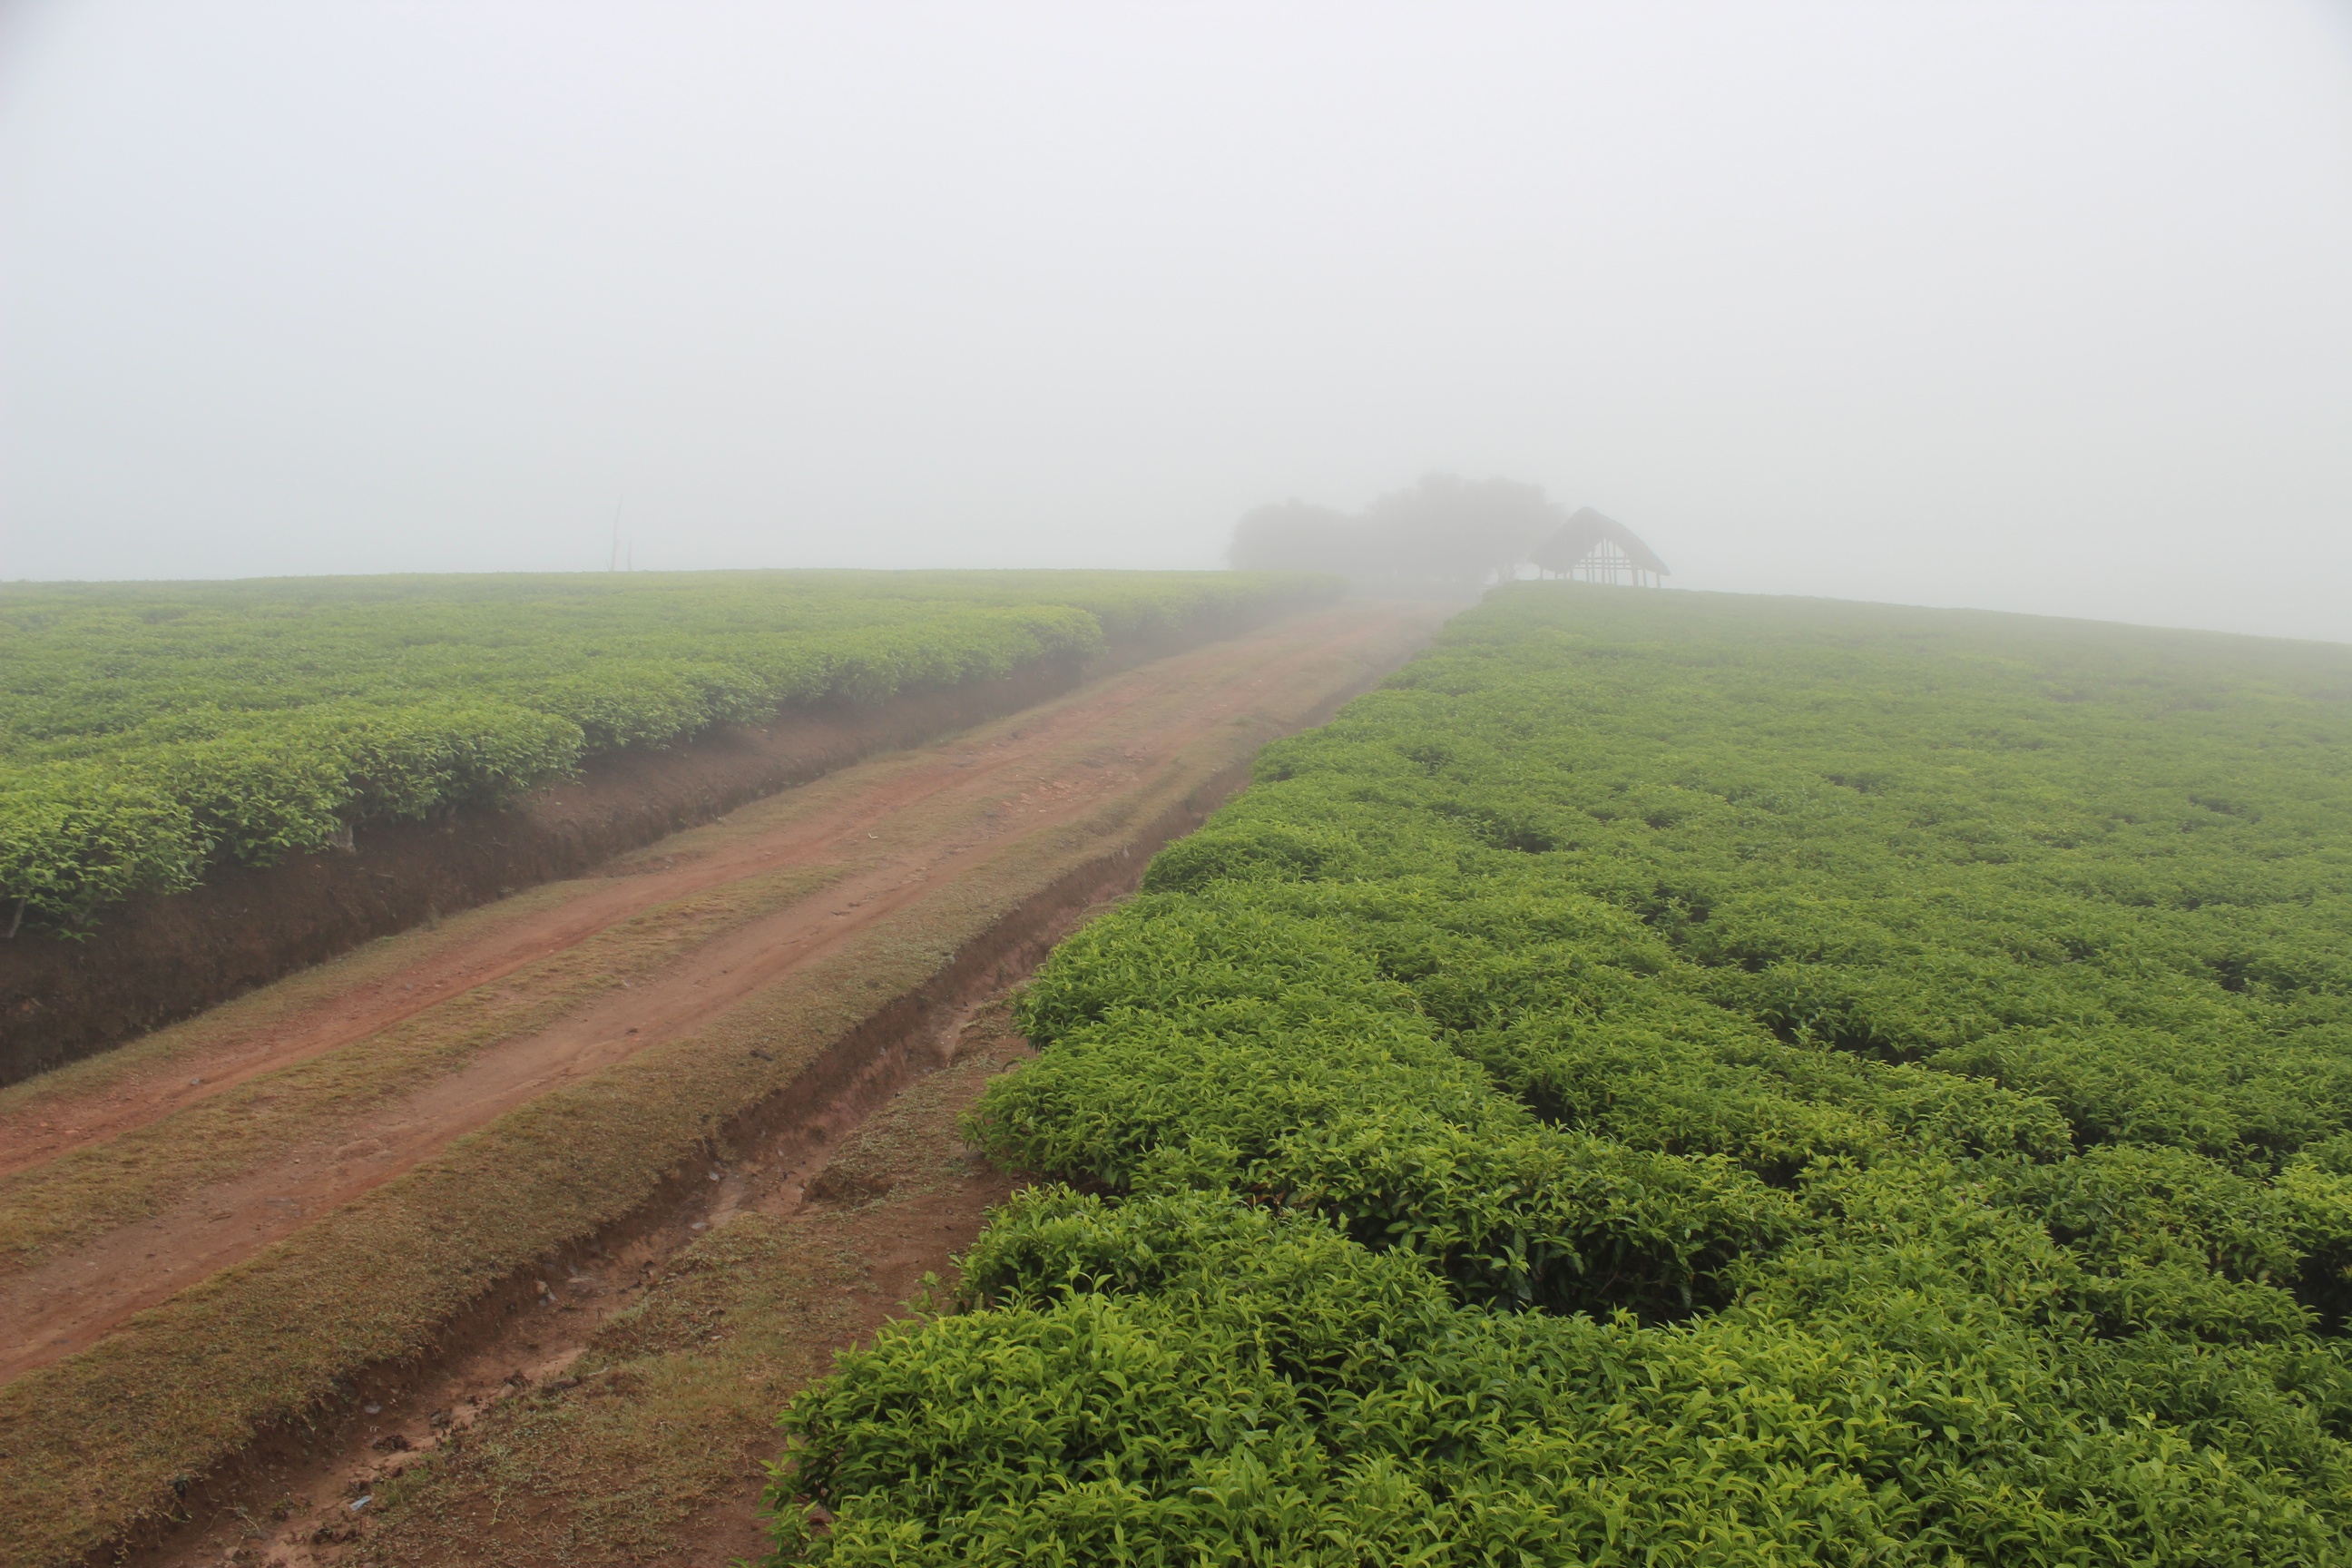 Plantation de thé à Madagascar